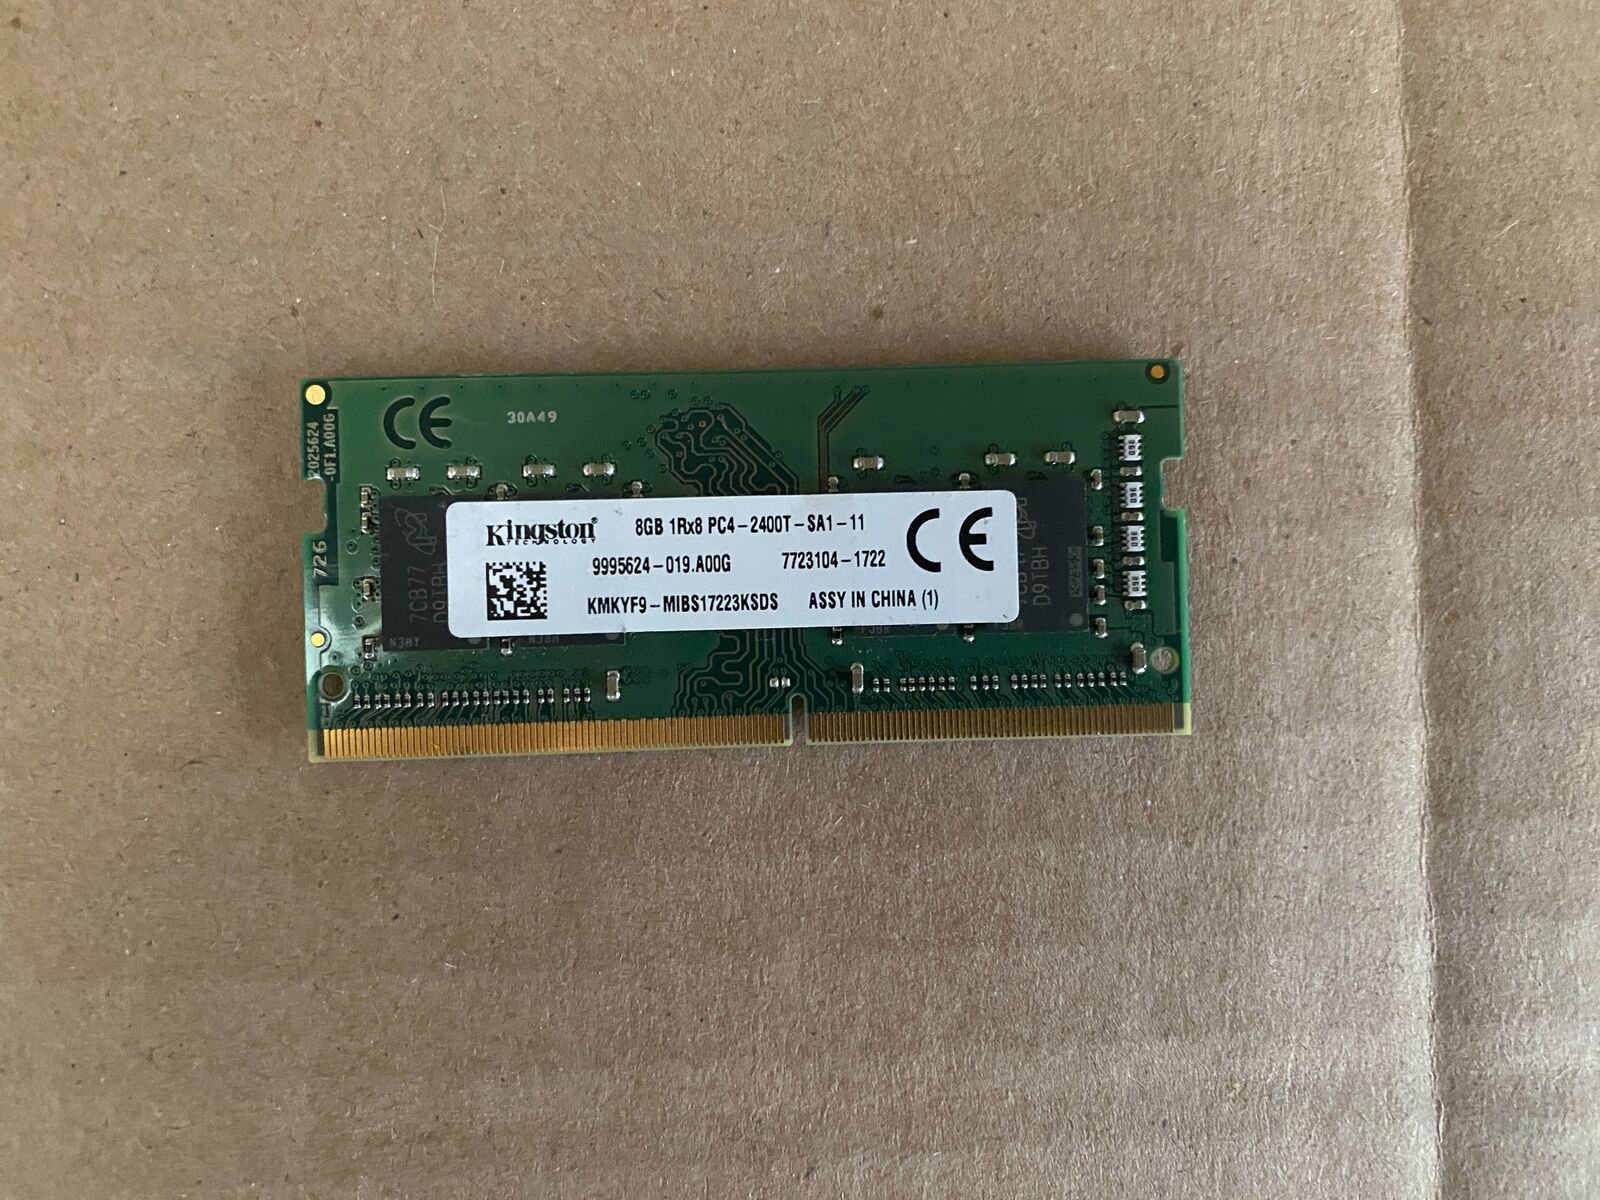 KINGSTON 8GB (1X8GB) 1RX8 PC4-2400T DDR4 SODIMM LAPTOP MEMORY KMKYF9-MIB V3-2(3)